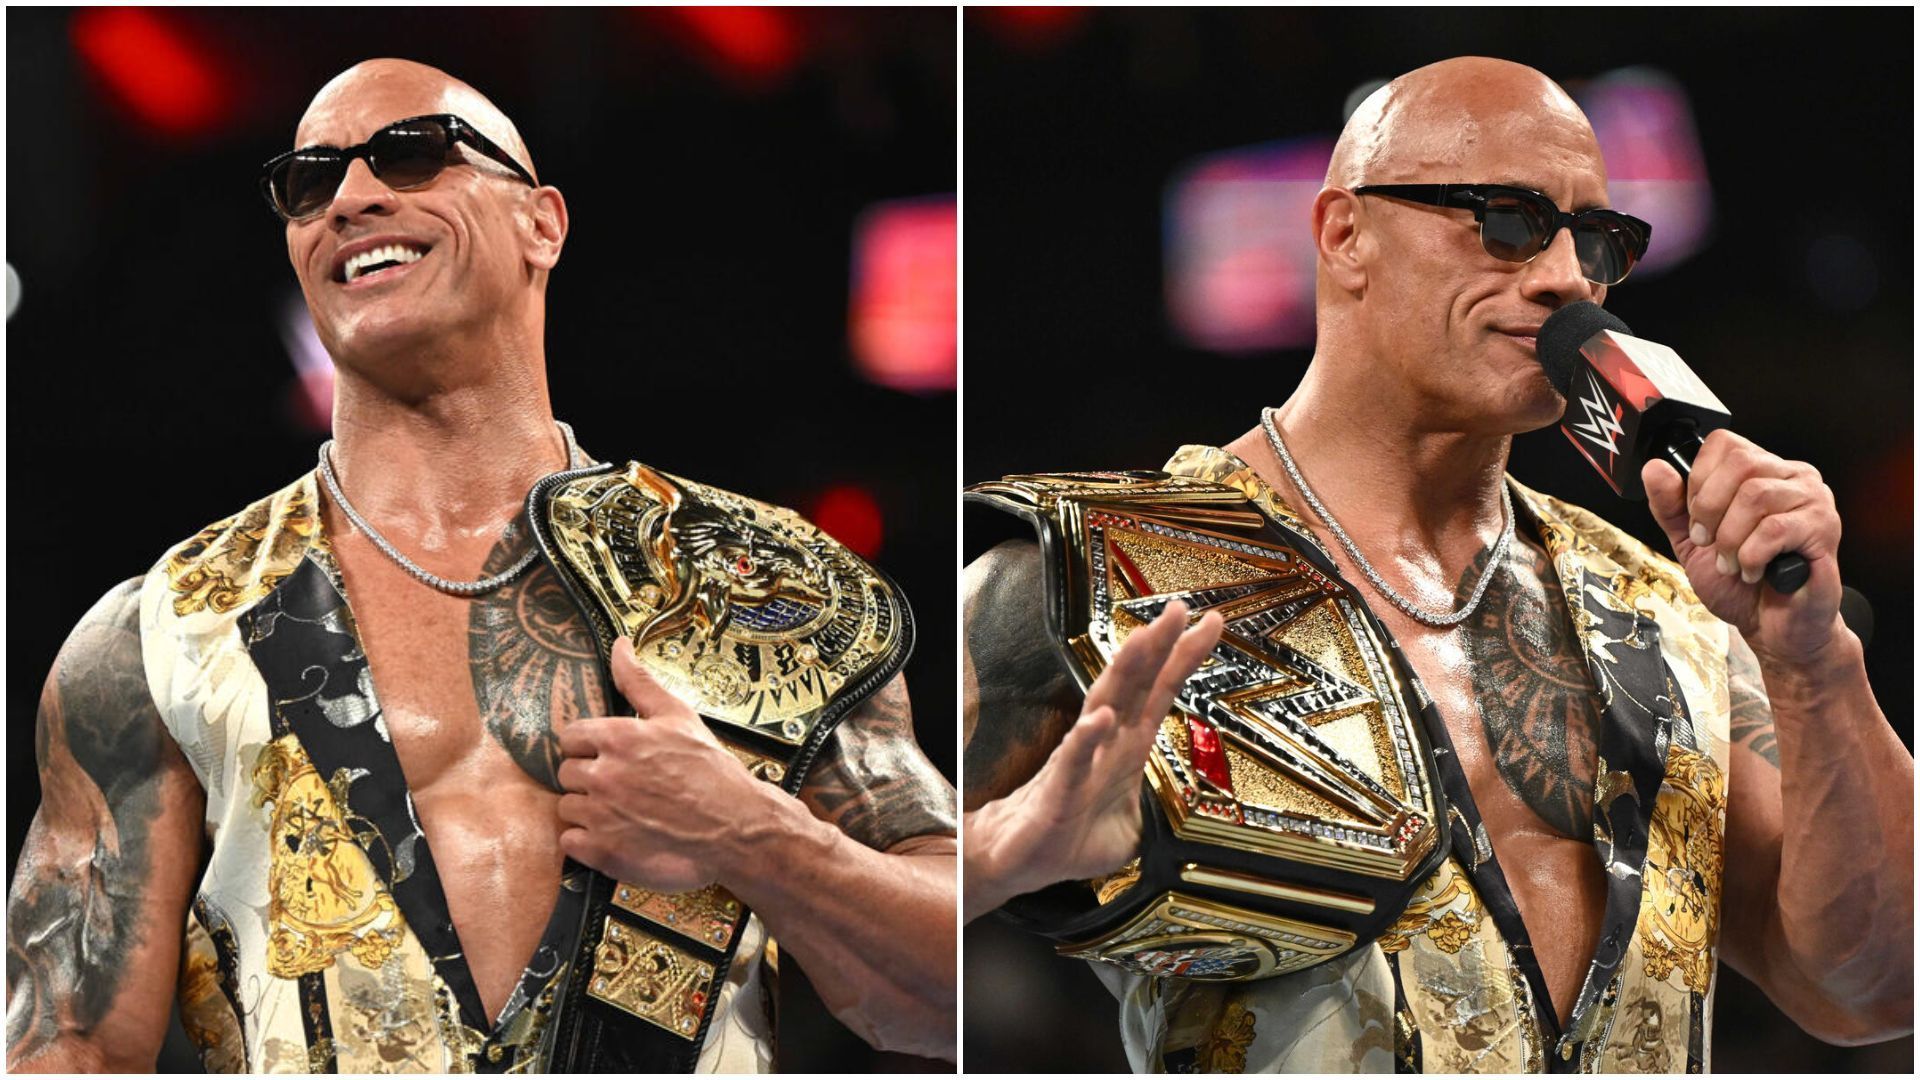 The Rock is a former WWE World Champion. [Image credits - WWE.com]